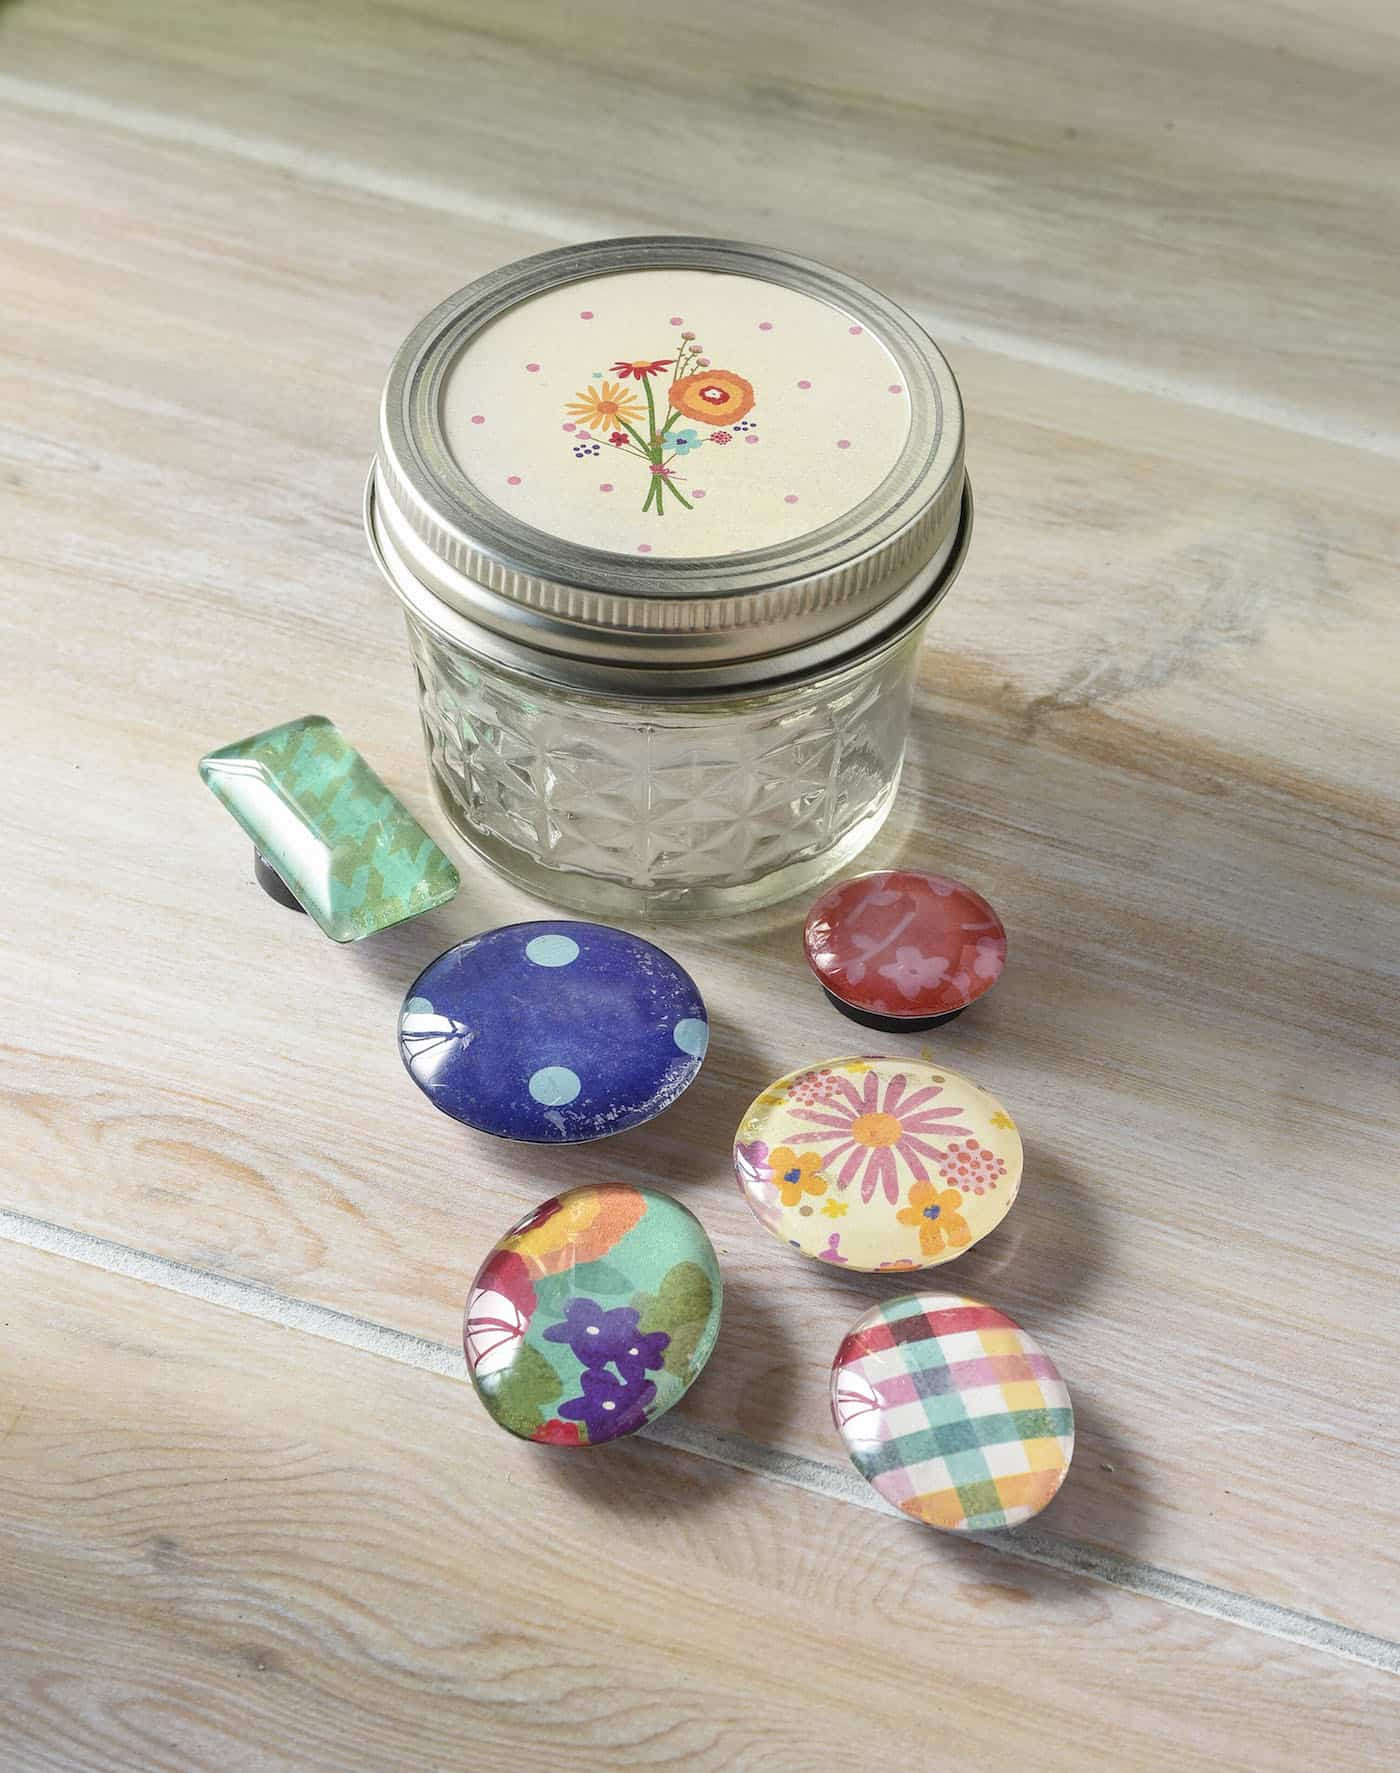 Best ideas about Mason Jar DIY
. Save or Pin Mason Jar Gifts Easy Handmade Magnets Mod Podge Rocks Now.